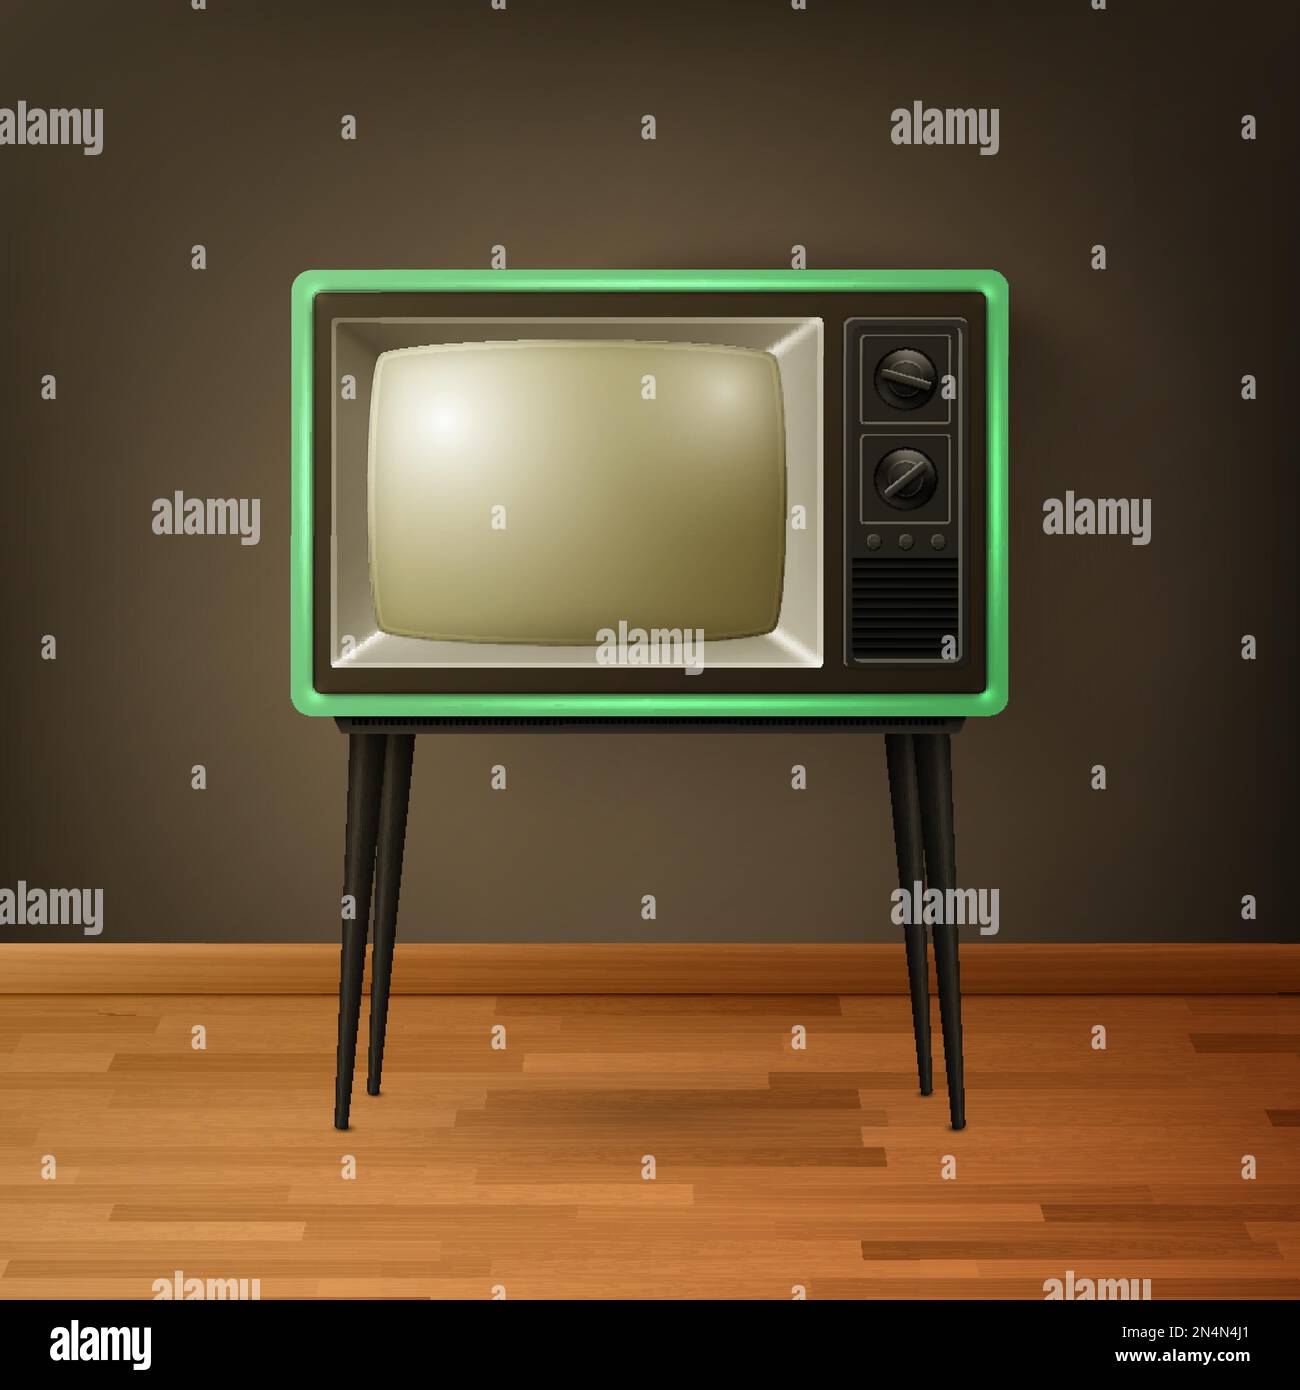 Vector 3d Realistic Retro TV Receiver on Wooden Floor. Home Interior Design Concept. Vintage TV Set, Television, Front View Stock Vector